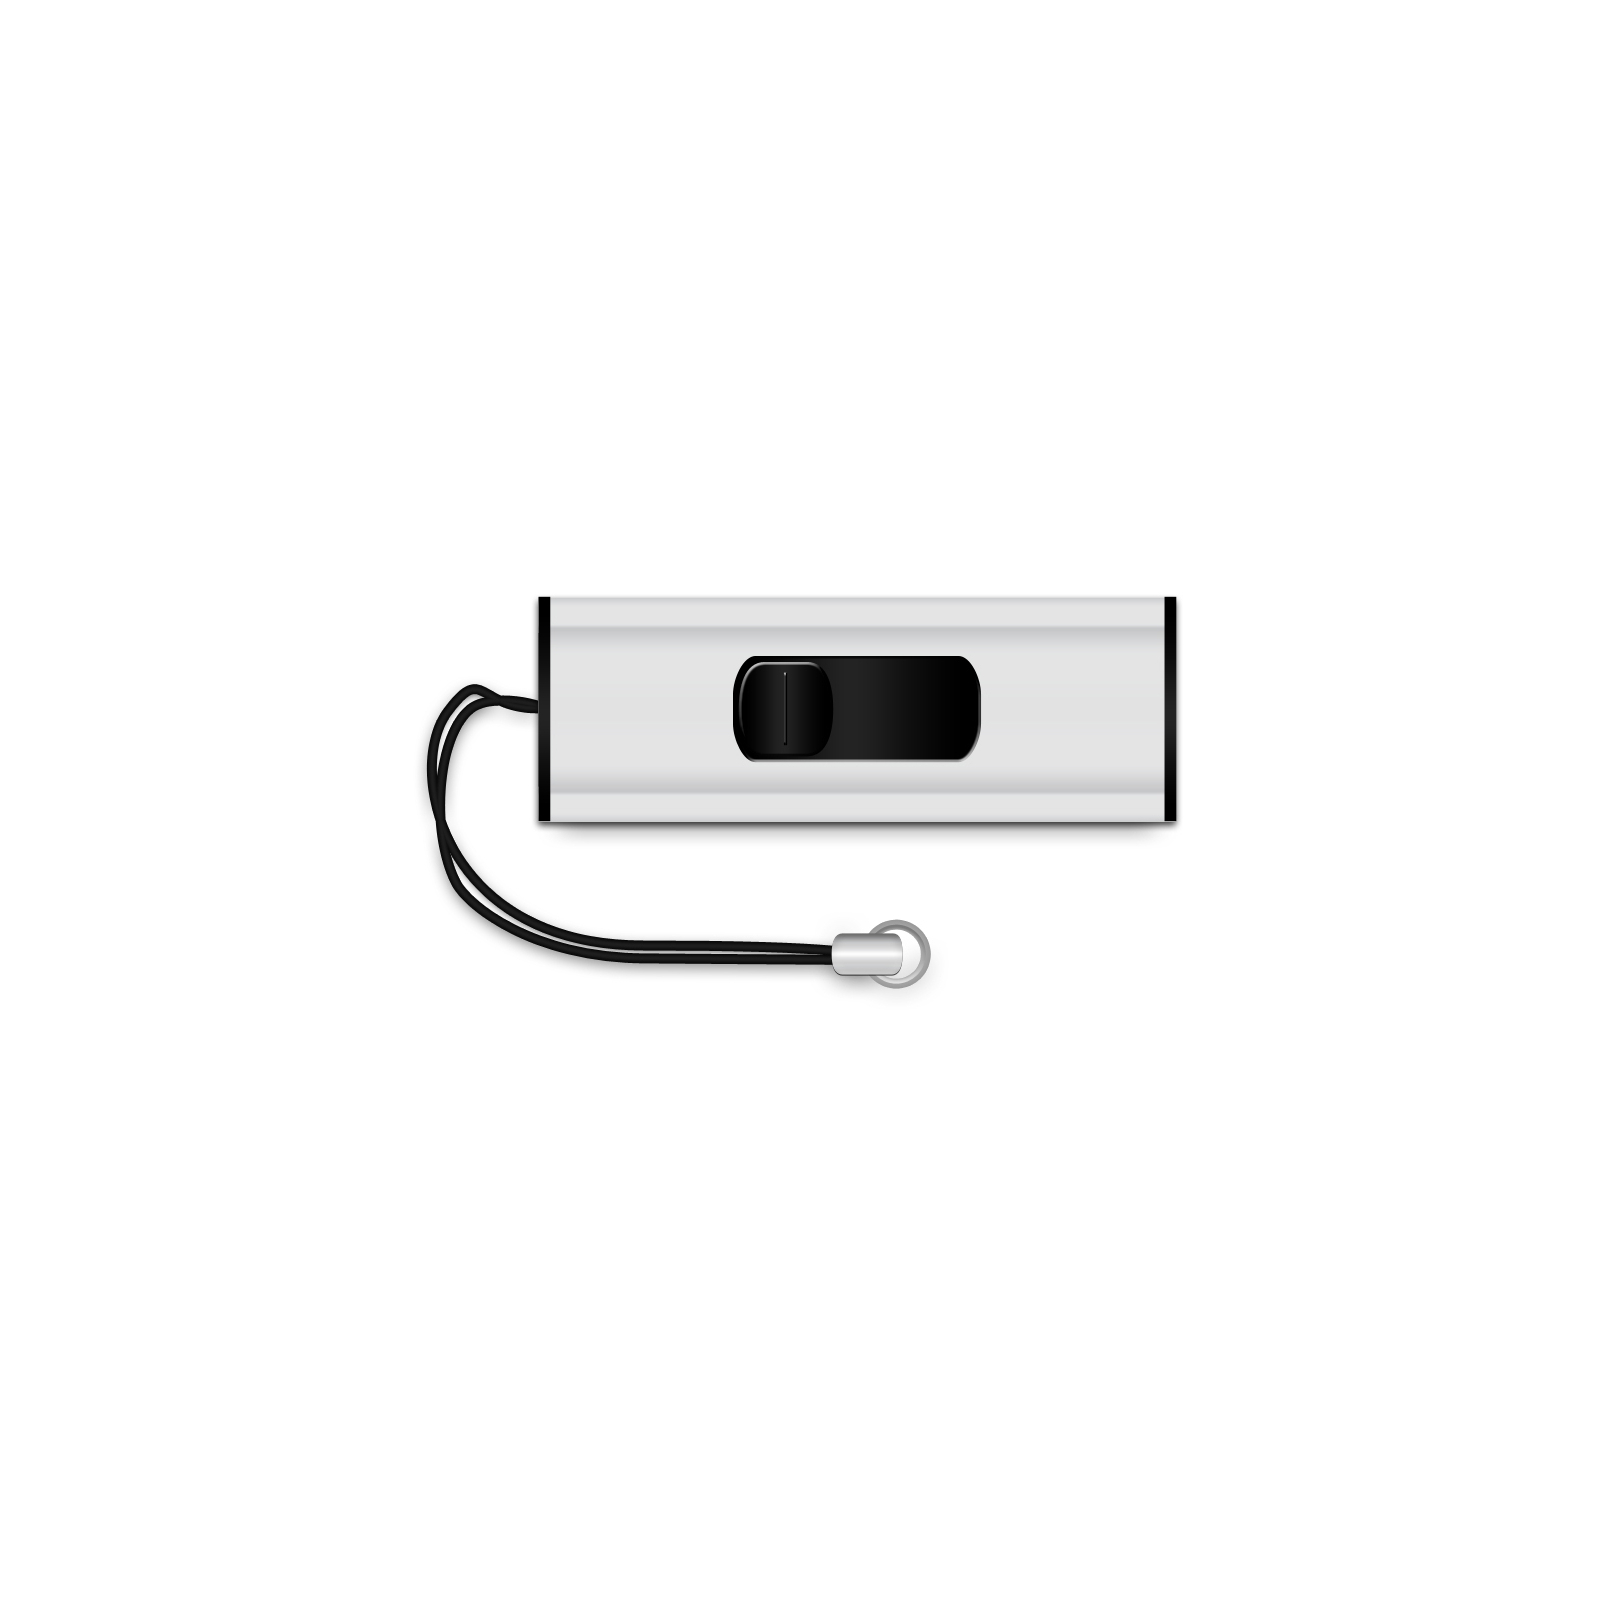 USB флеш накопитель Mediarange 128GB Black/Silver USB 3.0 (MR918) изображение 2